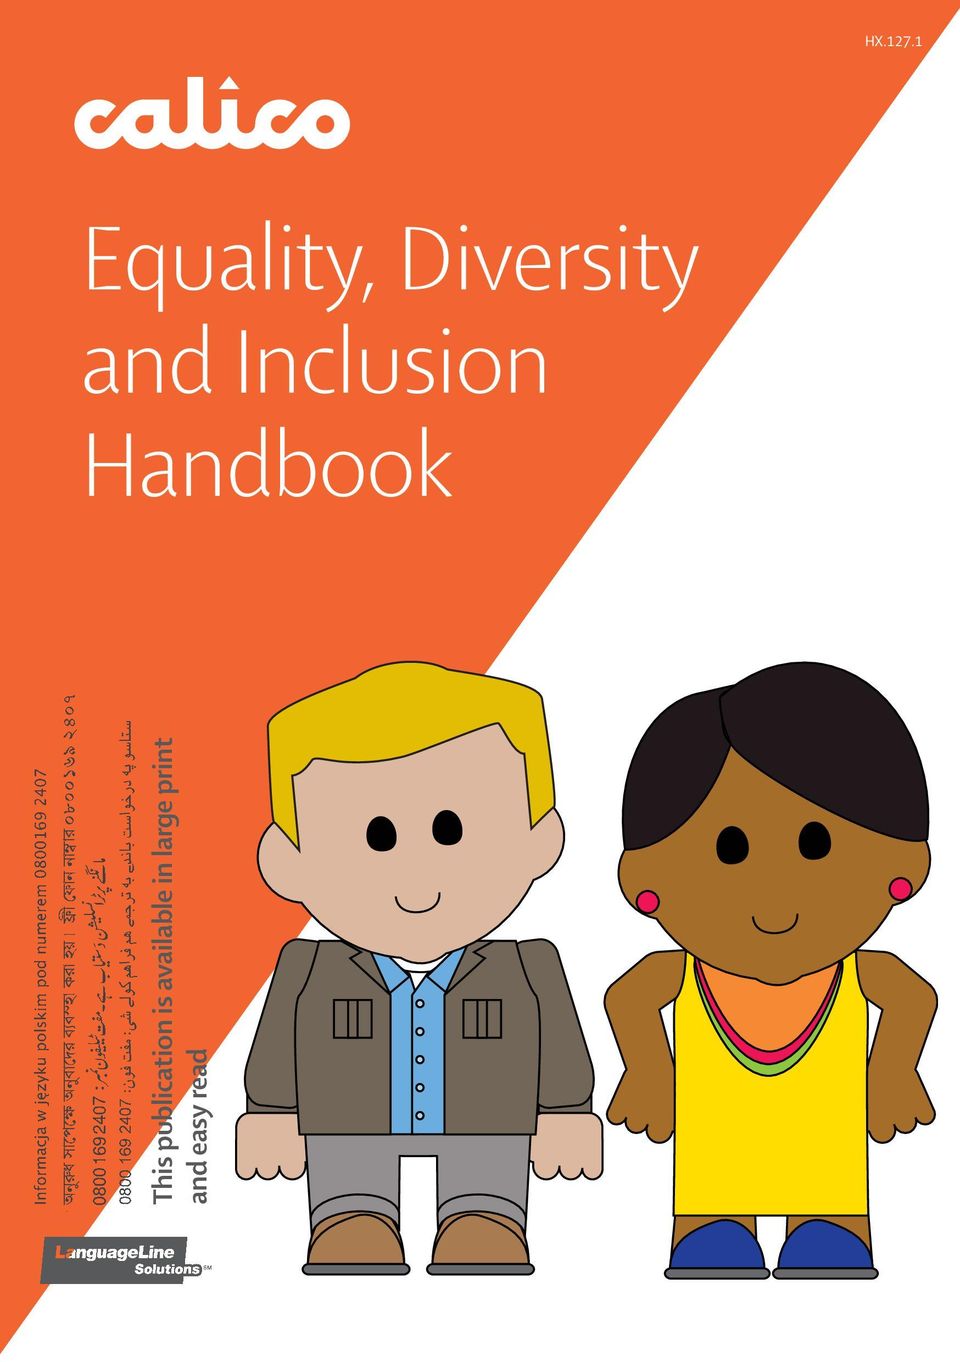 Inclusion Handbook This